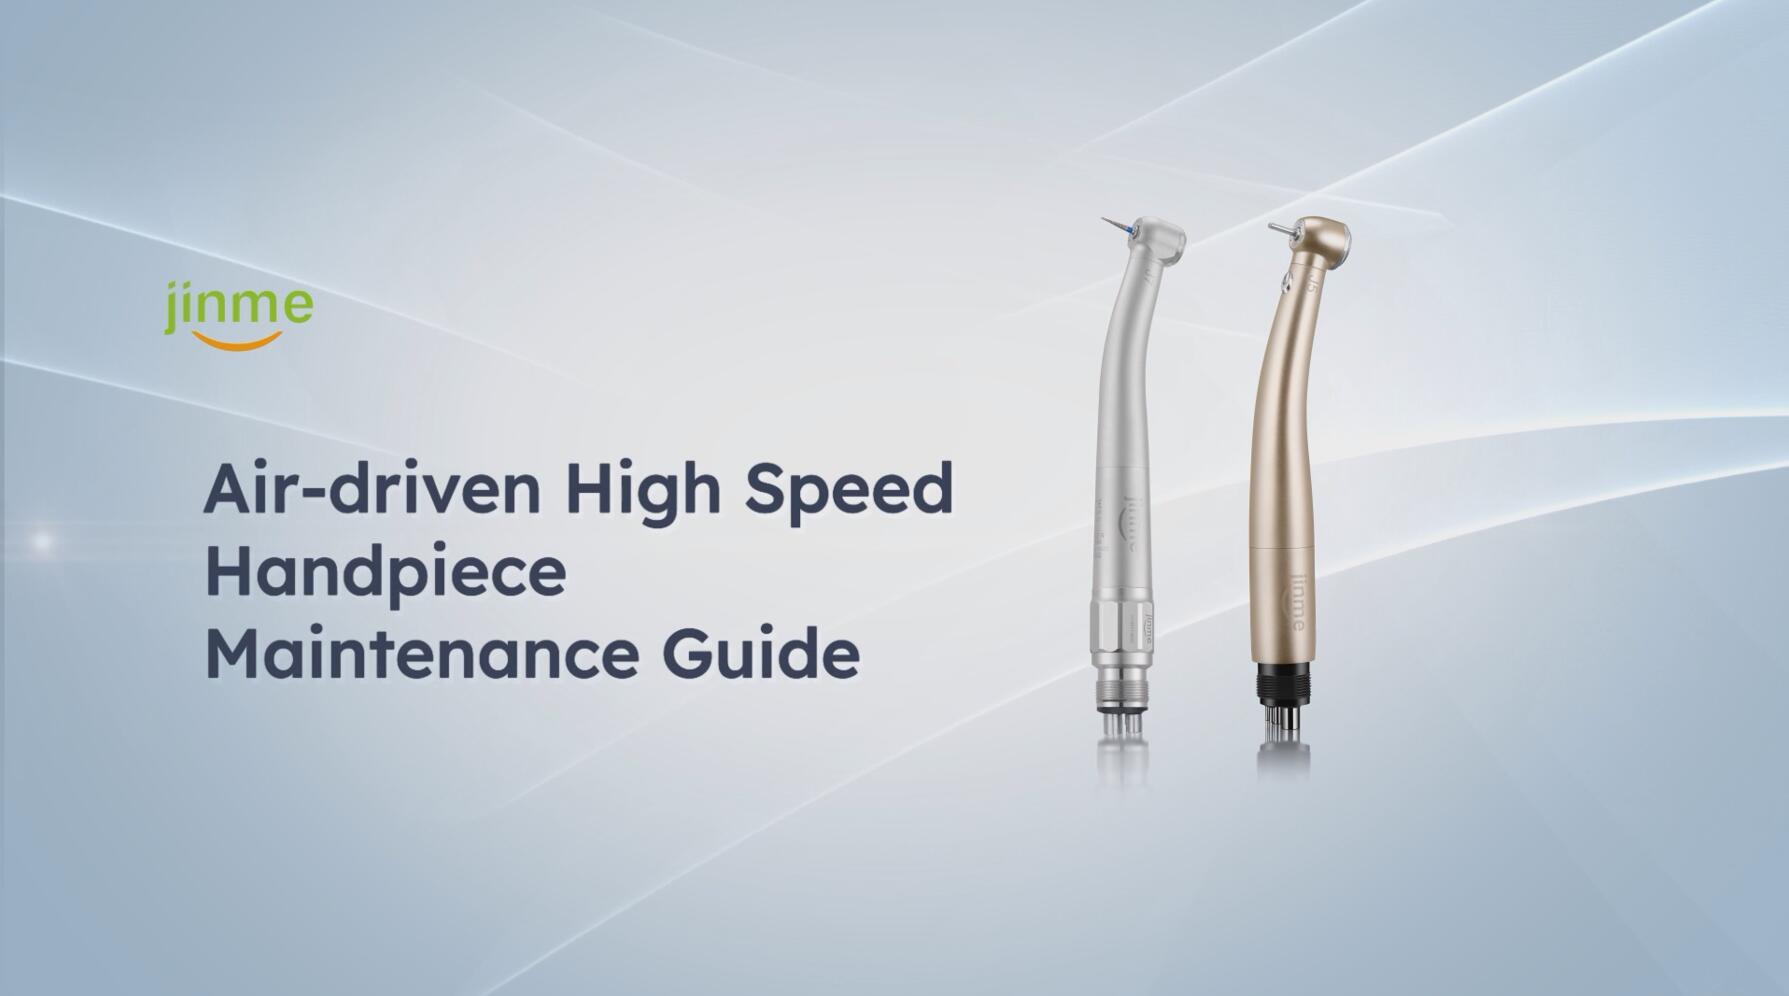 Maintenance of pneumatic turbine high-speed dental handpieces